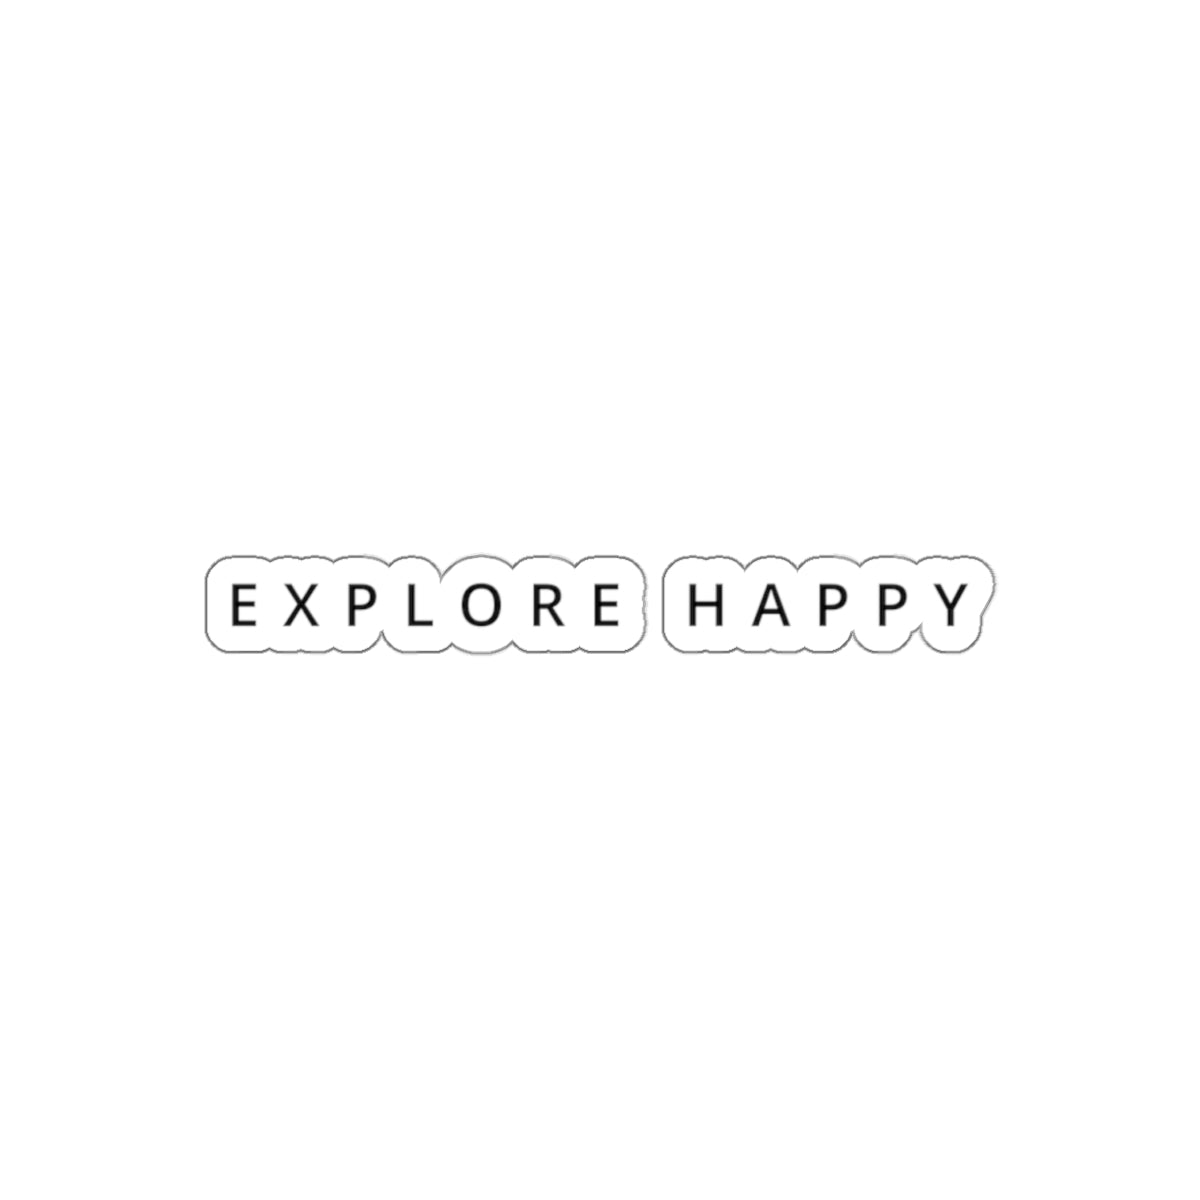 Explore Happy Stiker